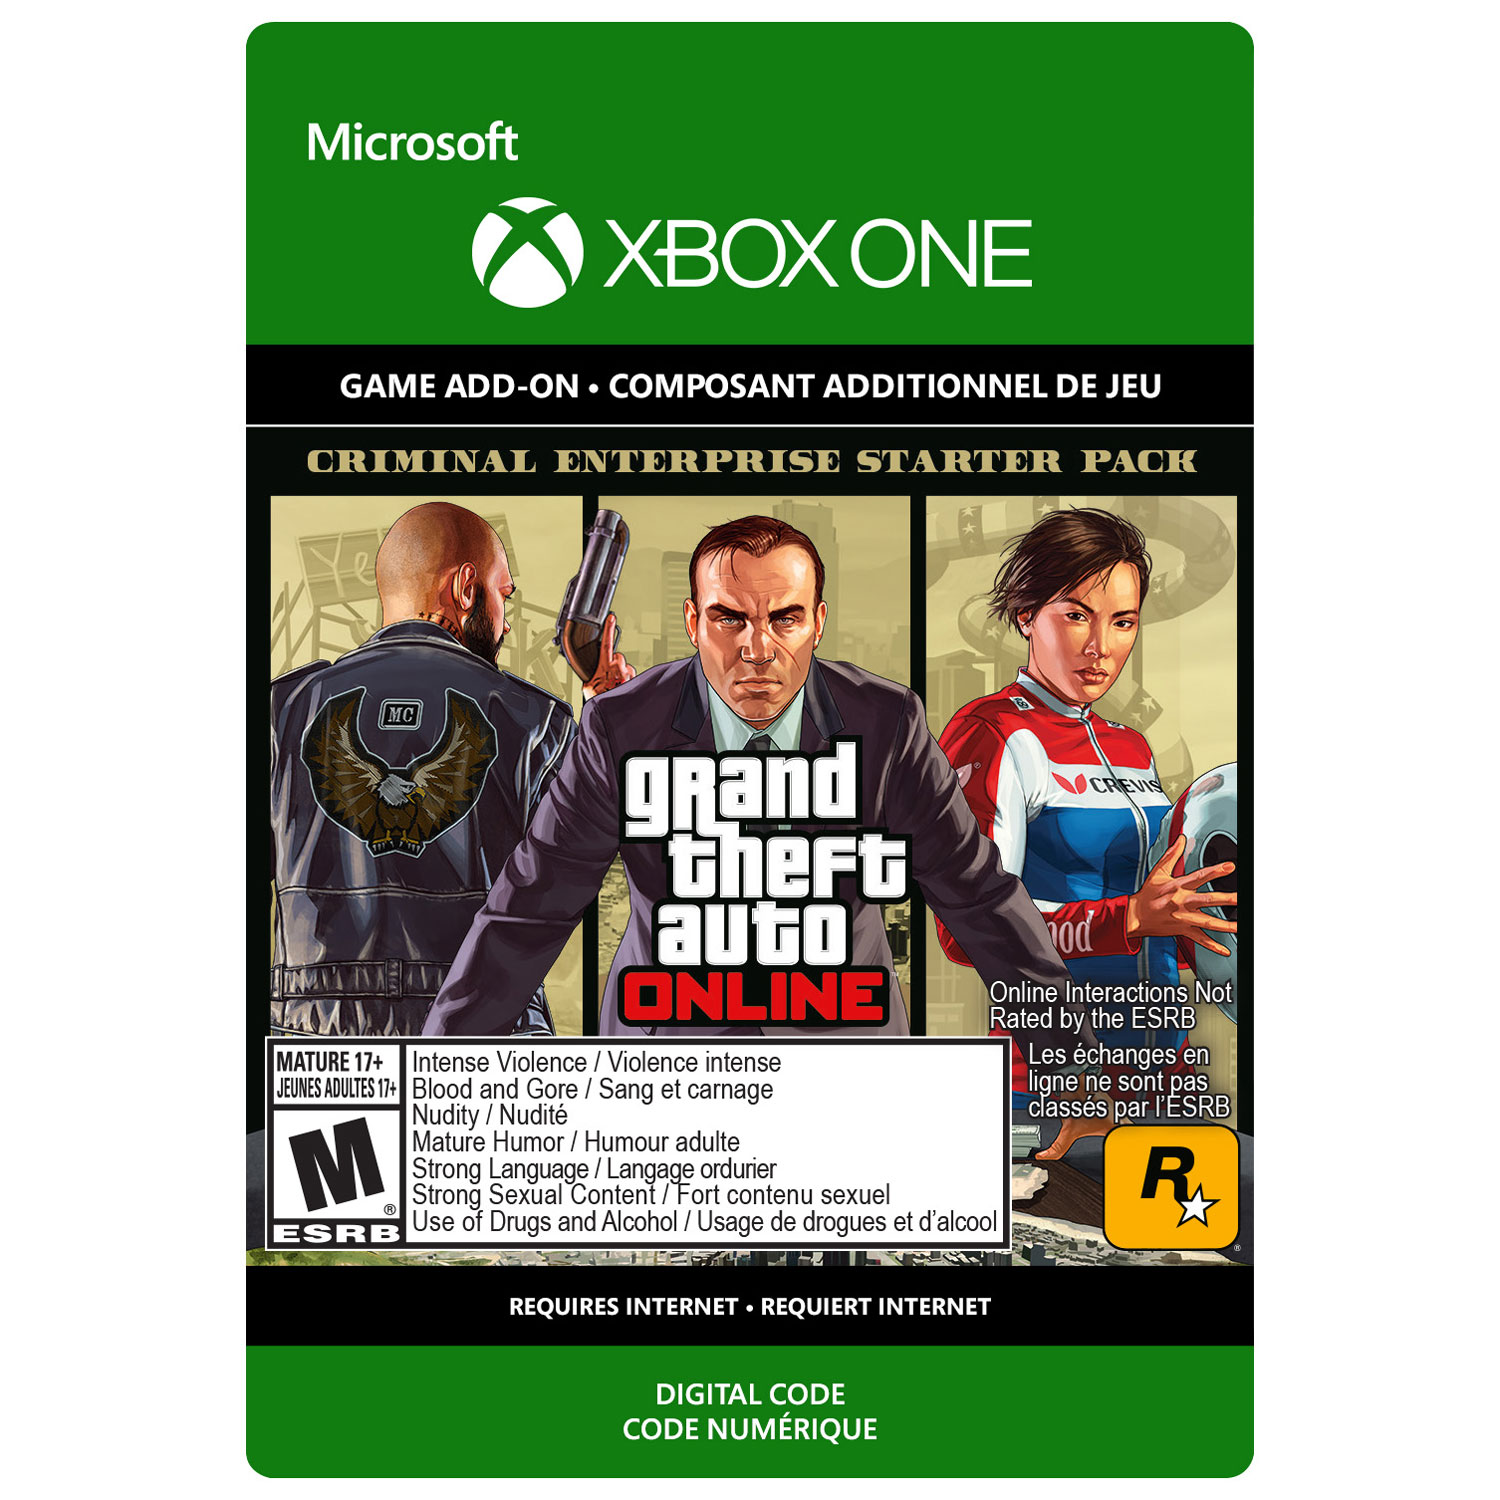 Grand Theft Auto Online Criminal Enterprise Starter Pack (Xbox One) - Digital Download